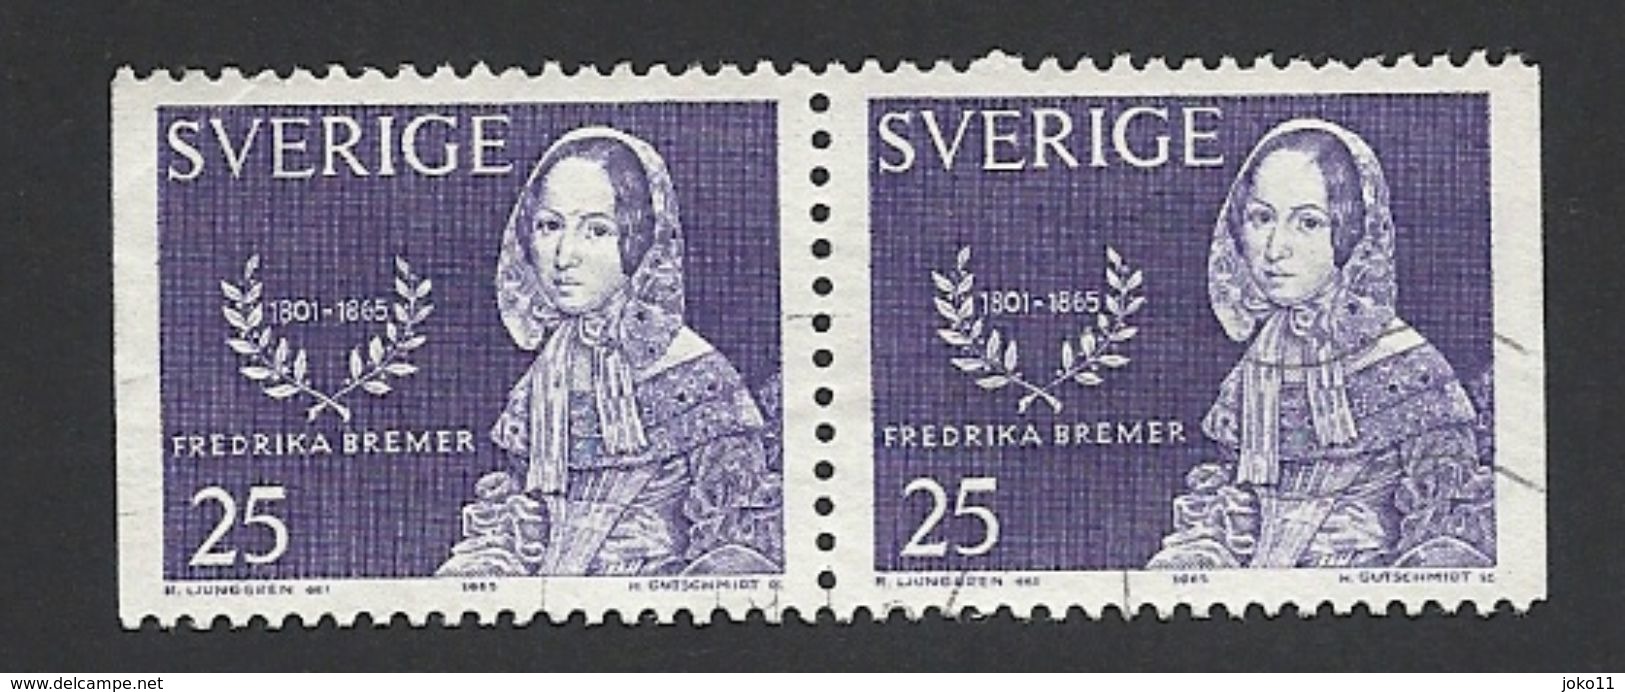 Schweden, 1965, Michel-Nr. 540 D/D, Gestempelt - Used Stamps